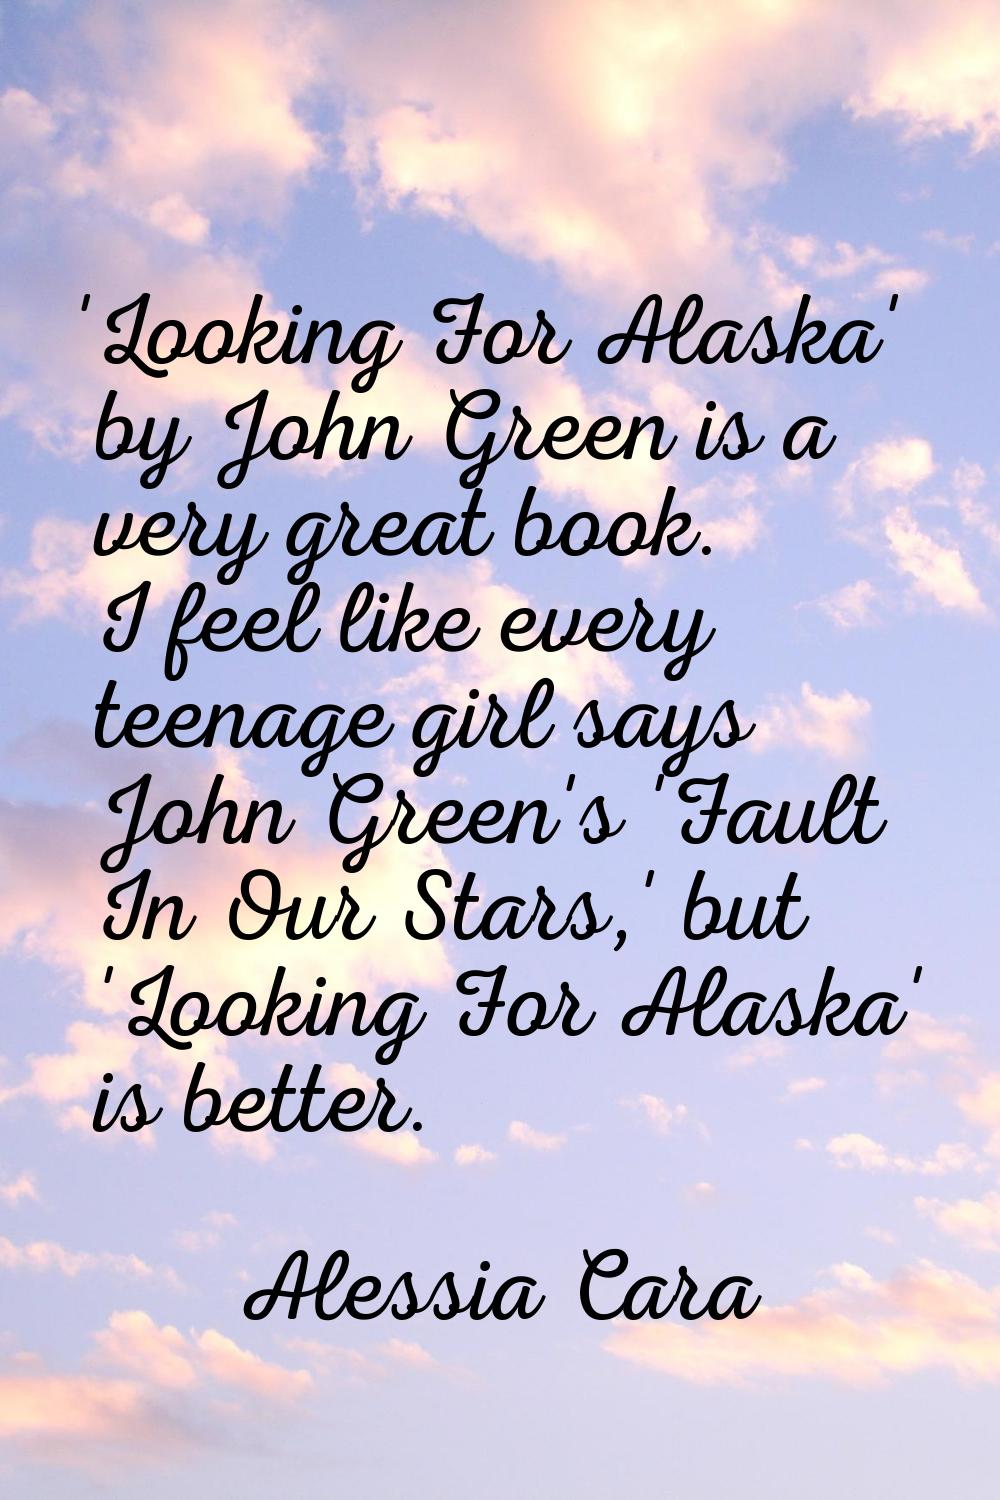 'Looking For Alaska' by John Green is a very great book. I feel like every teenage girl says John G